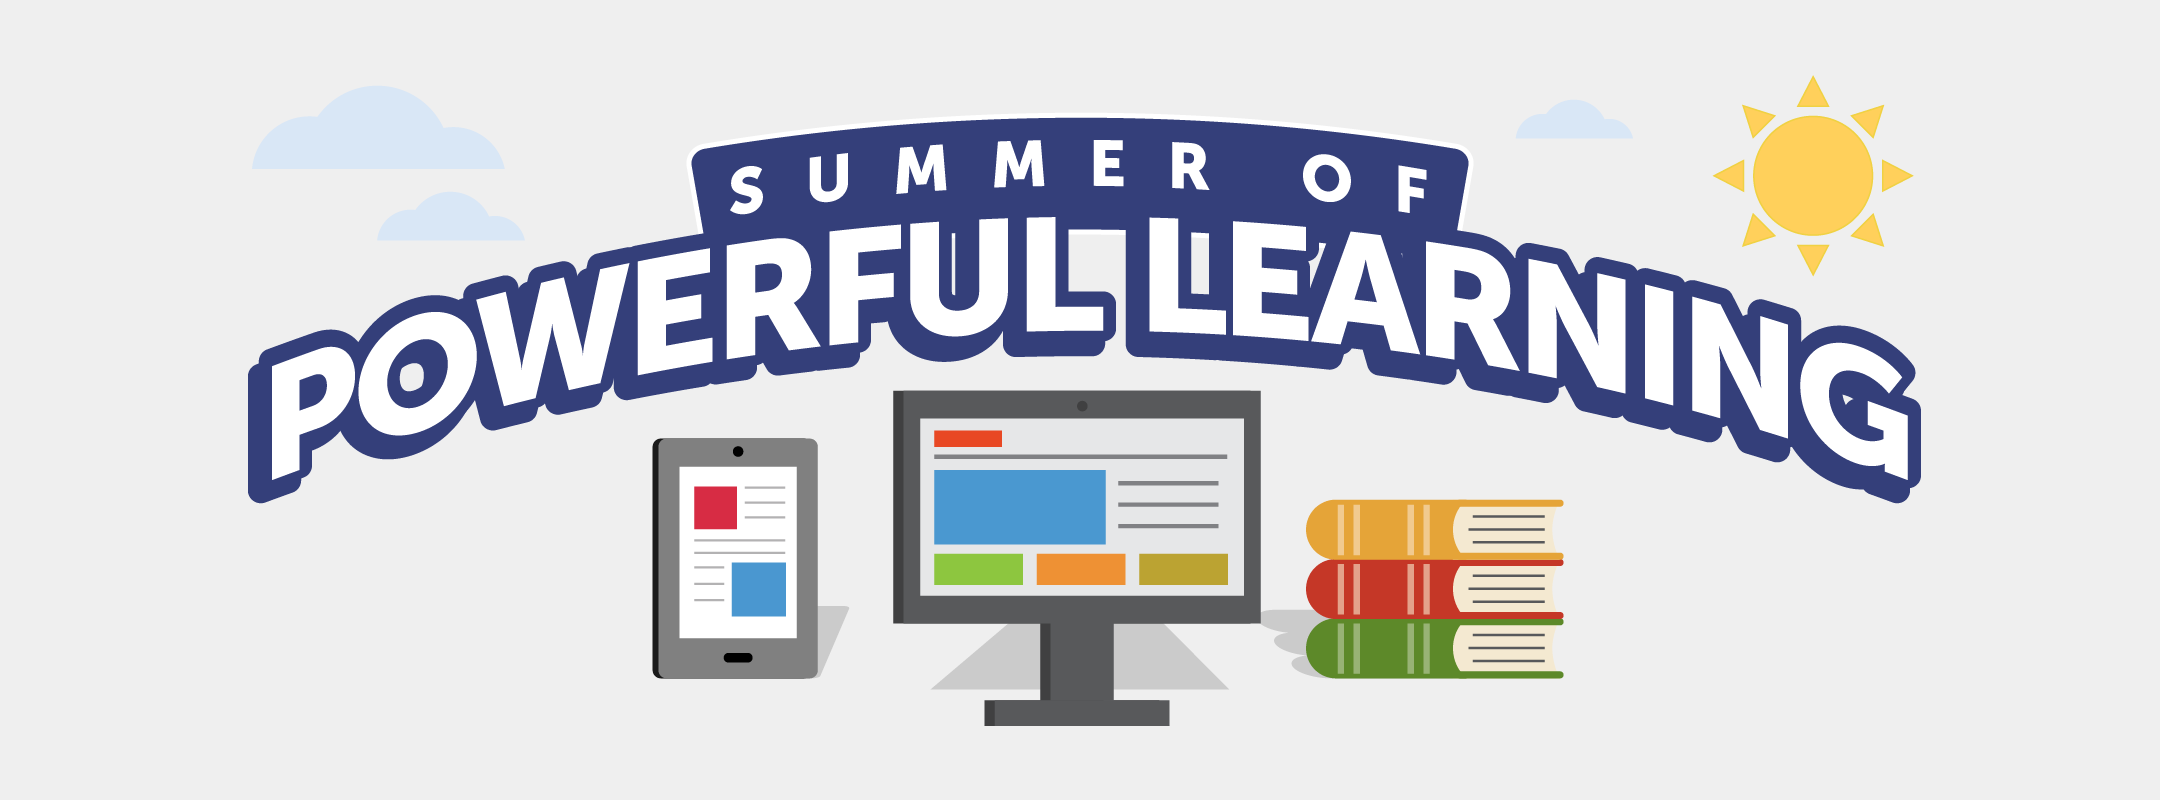 Digital Promise Webinars - Summer of Powerful Learning